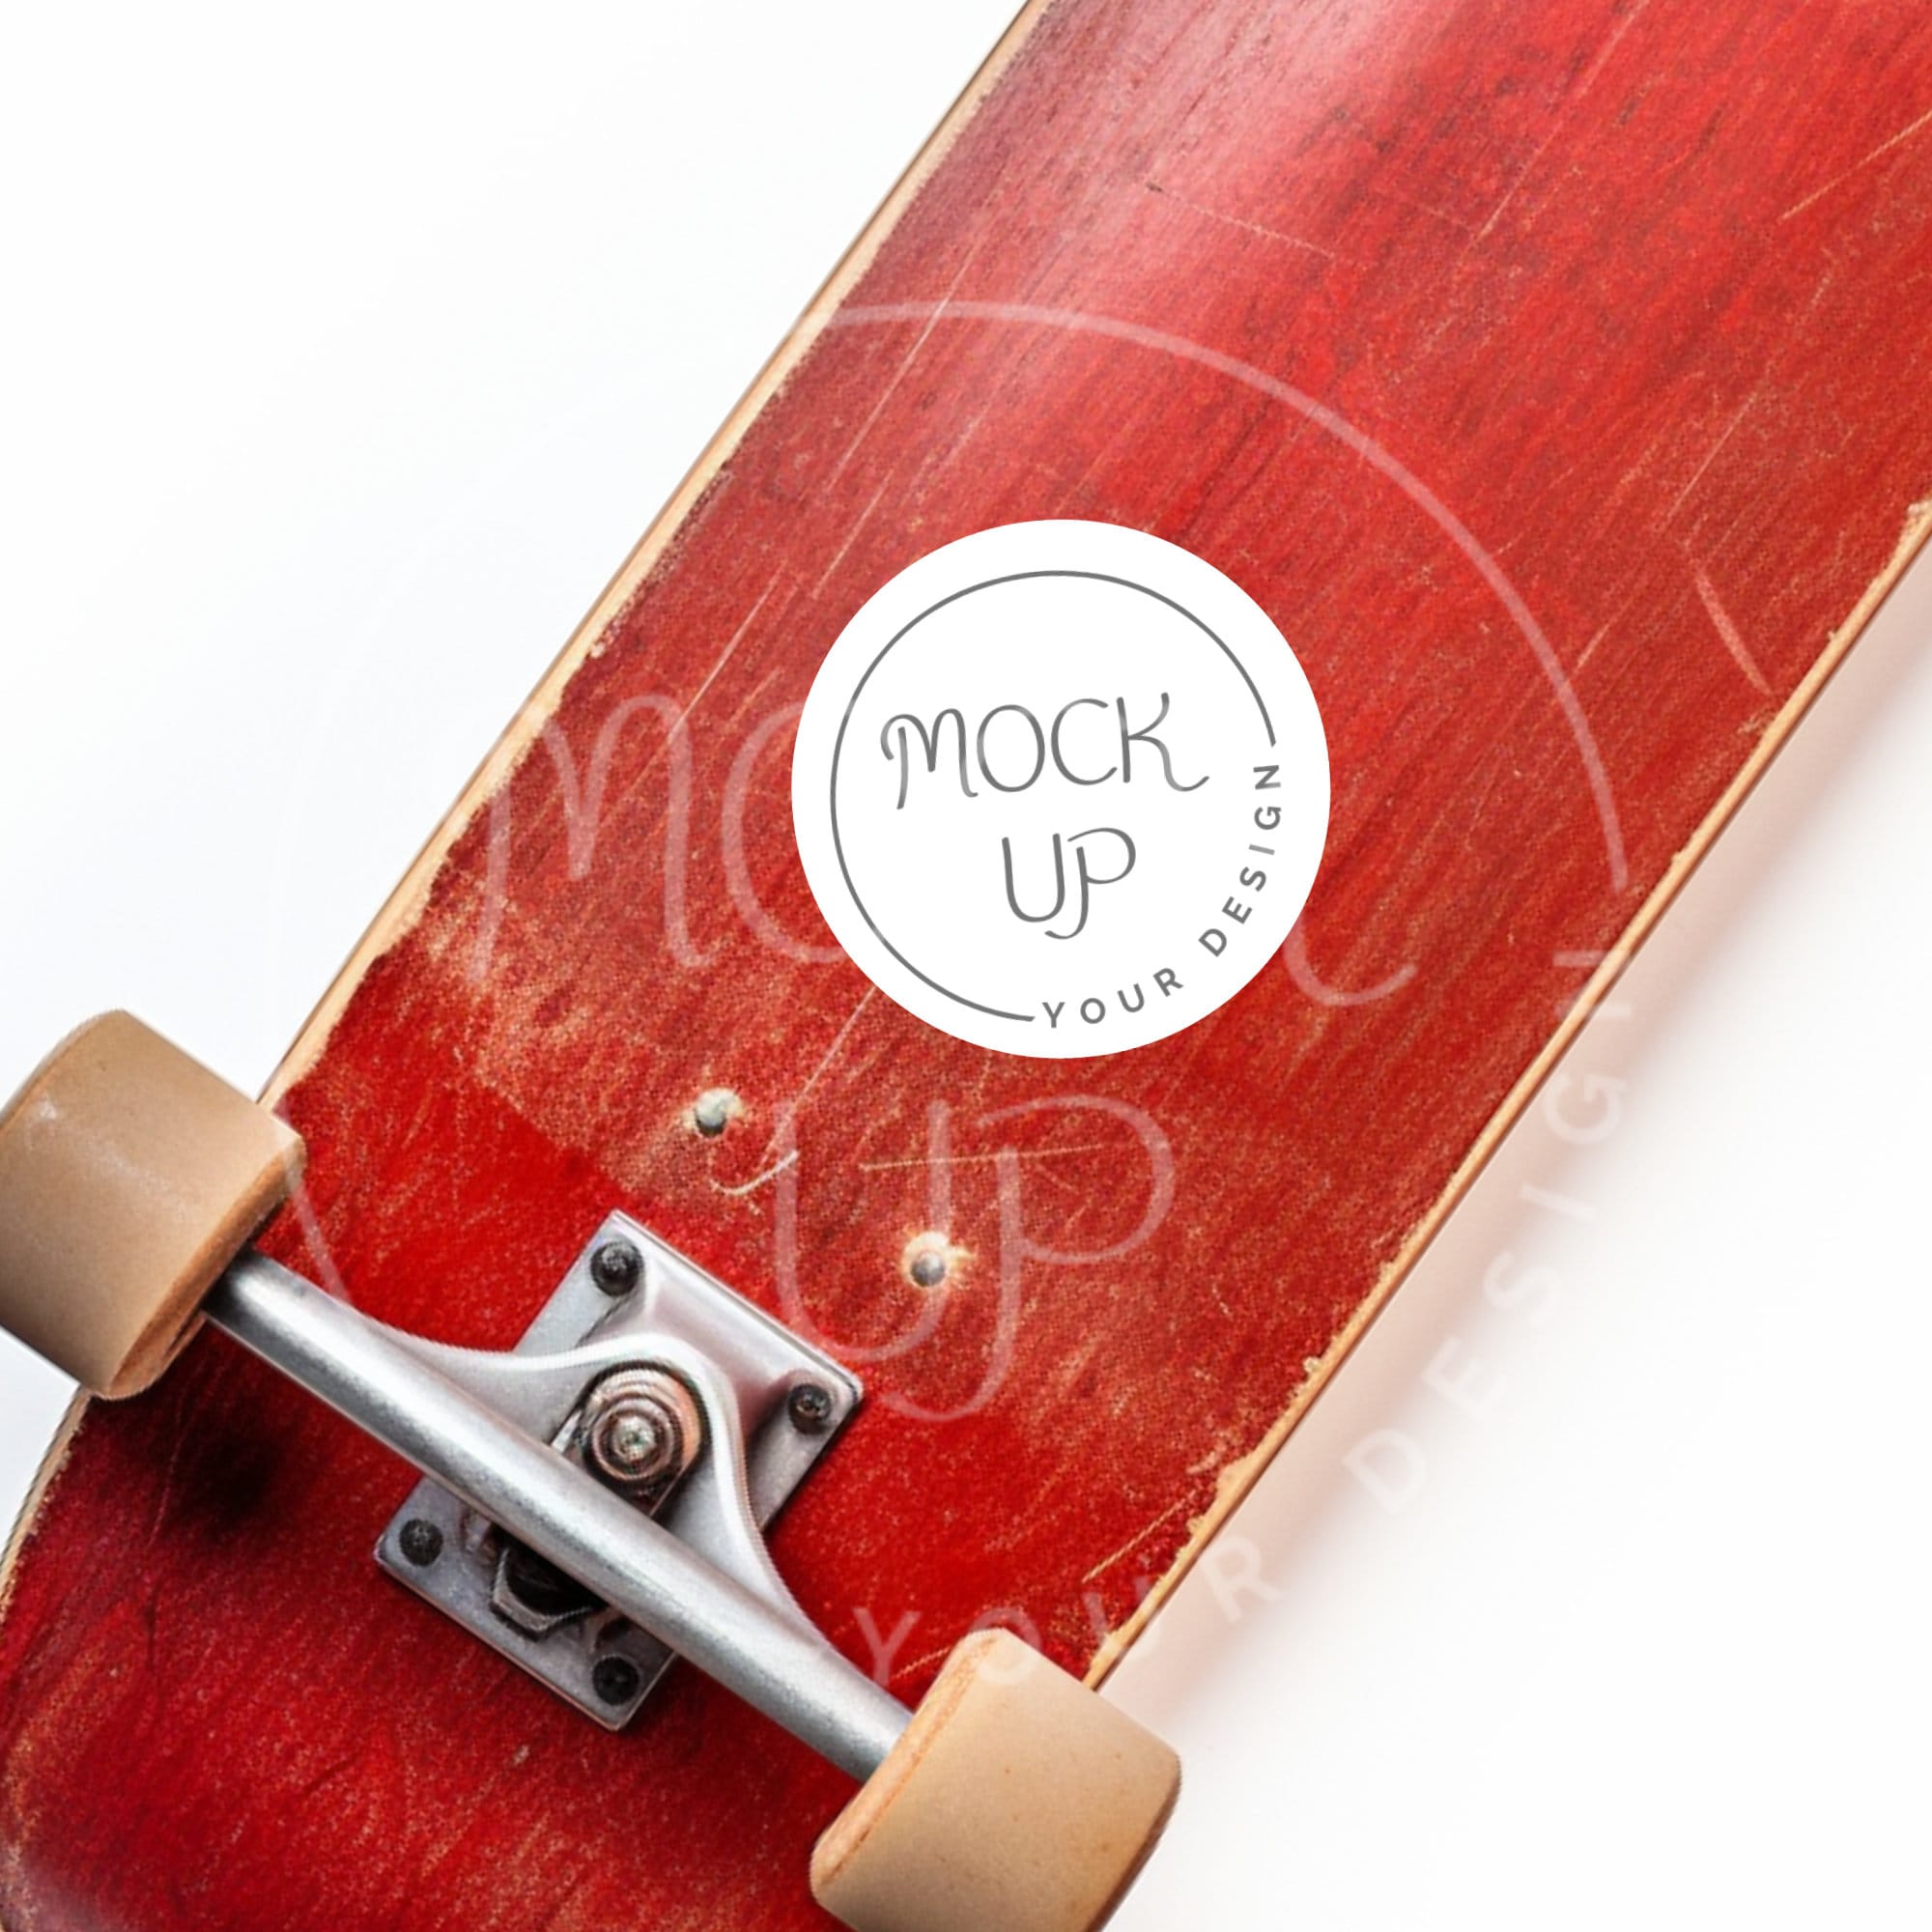 Material Skateboard - Compra stickers y material diverso de Skateboard